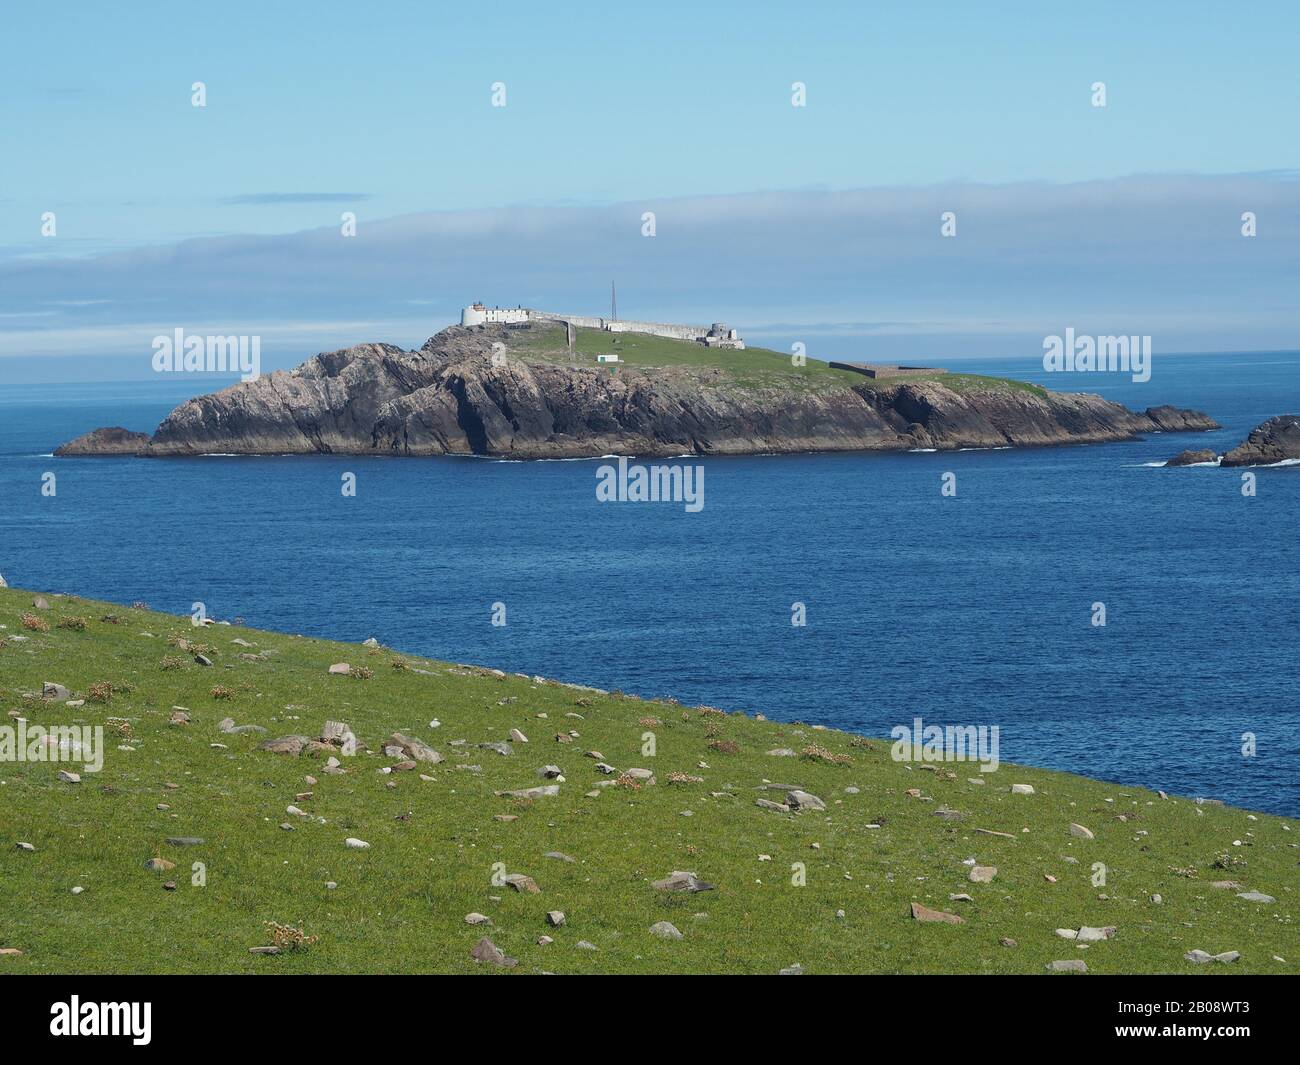 Eagle Island and Lighthouse, Erris, Co. Mayo, Ireland seen from Doonamo point Stock Photo